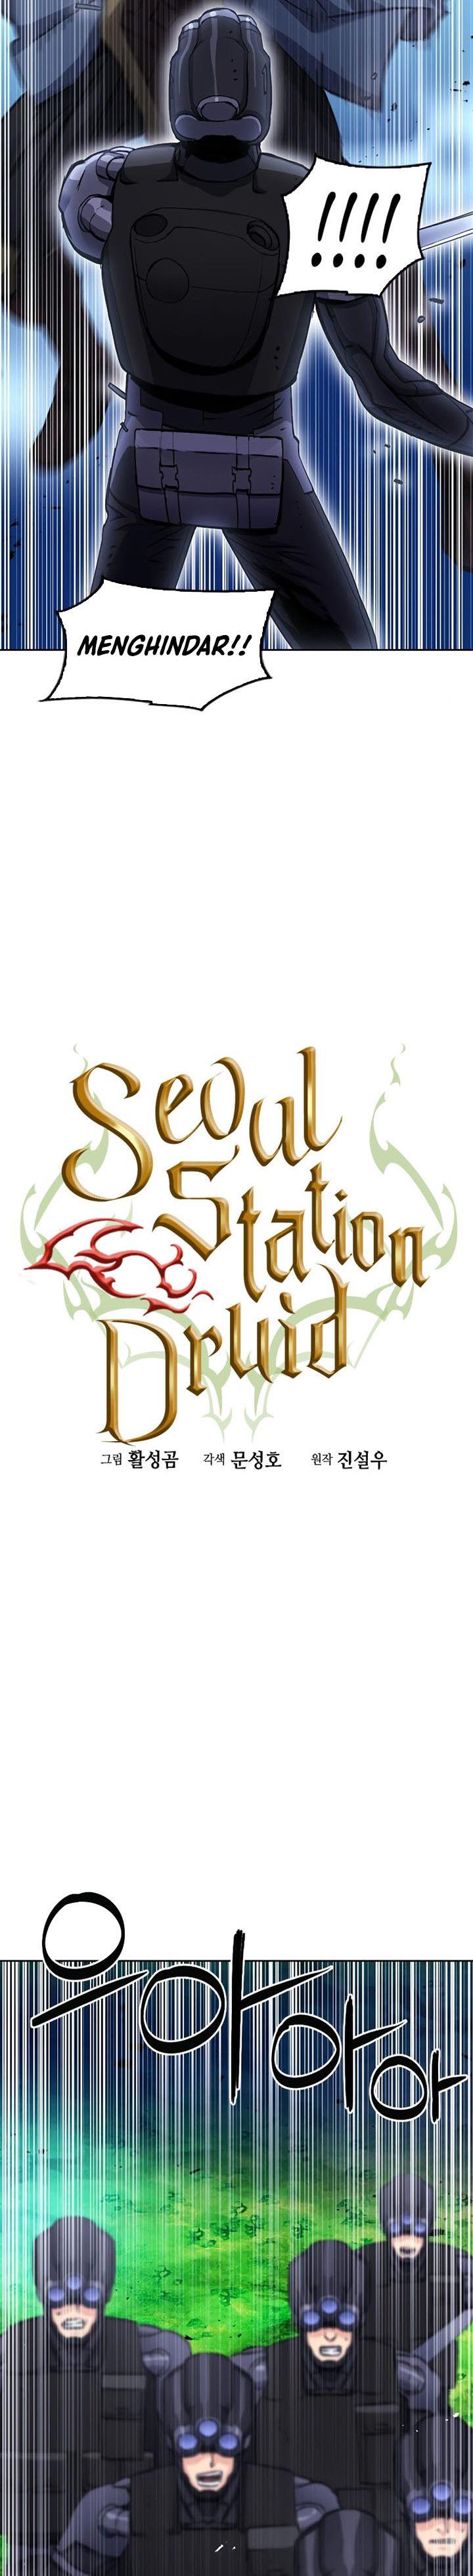 Seoul Station Druid Chapter 84